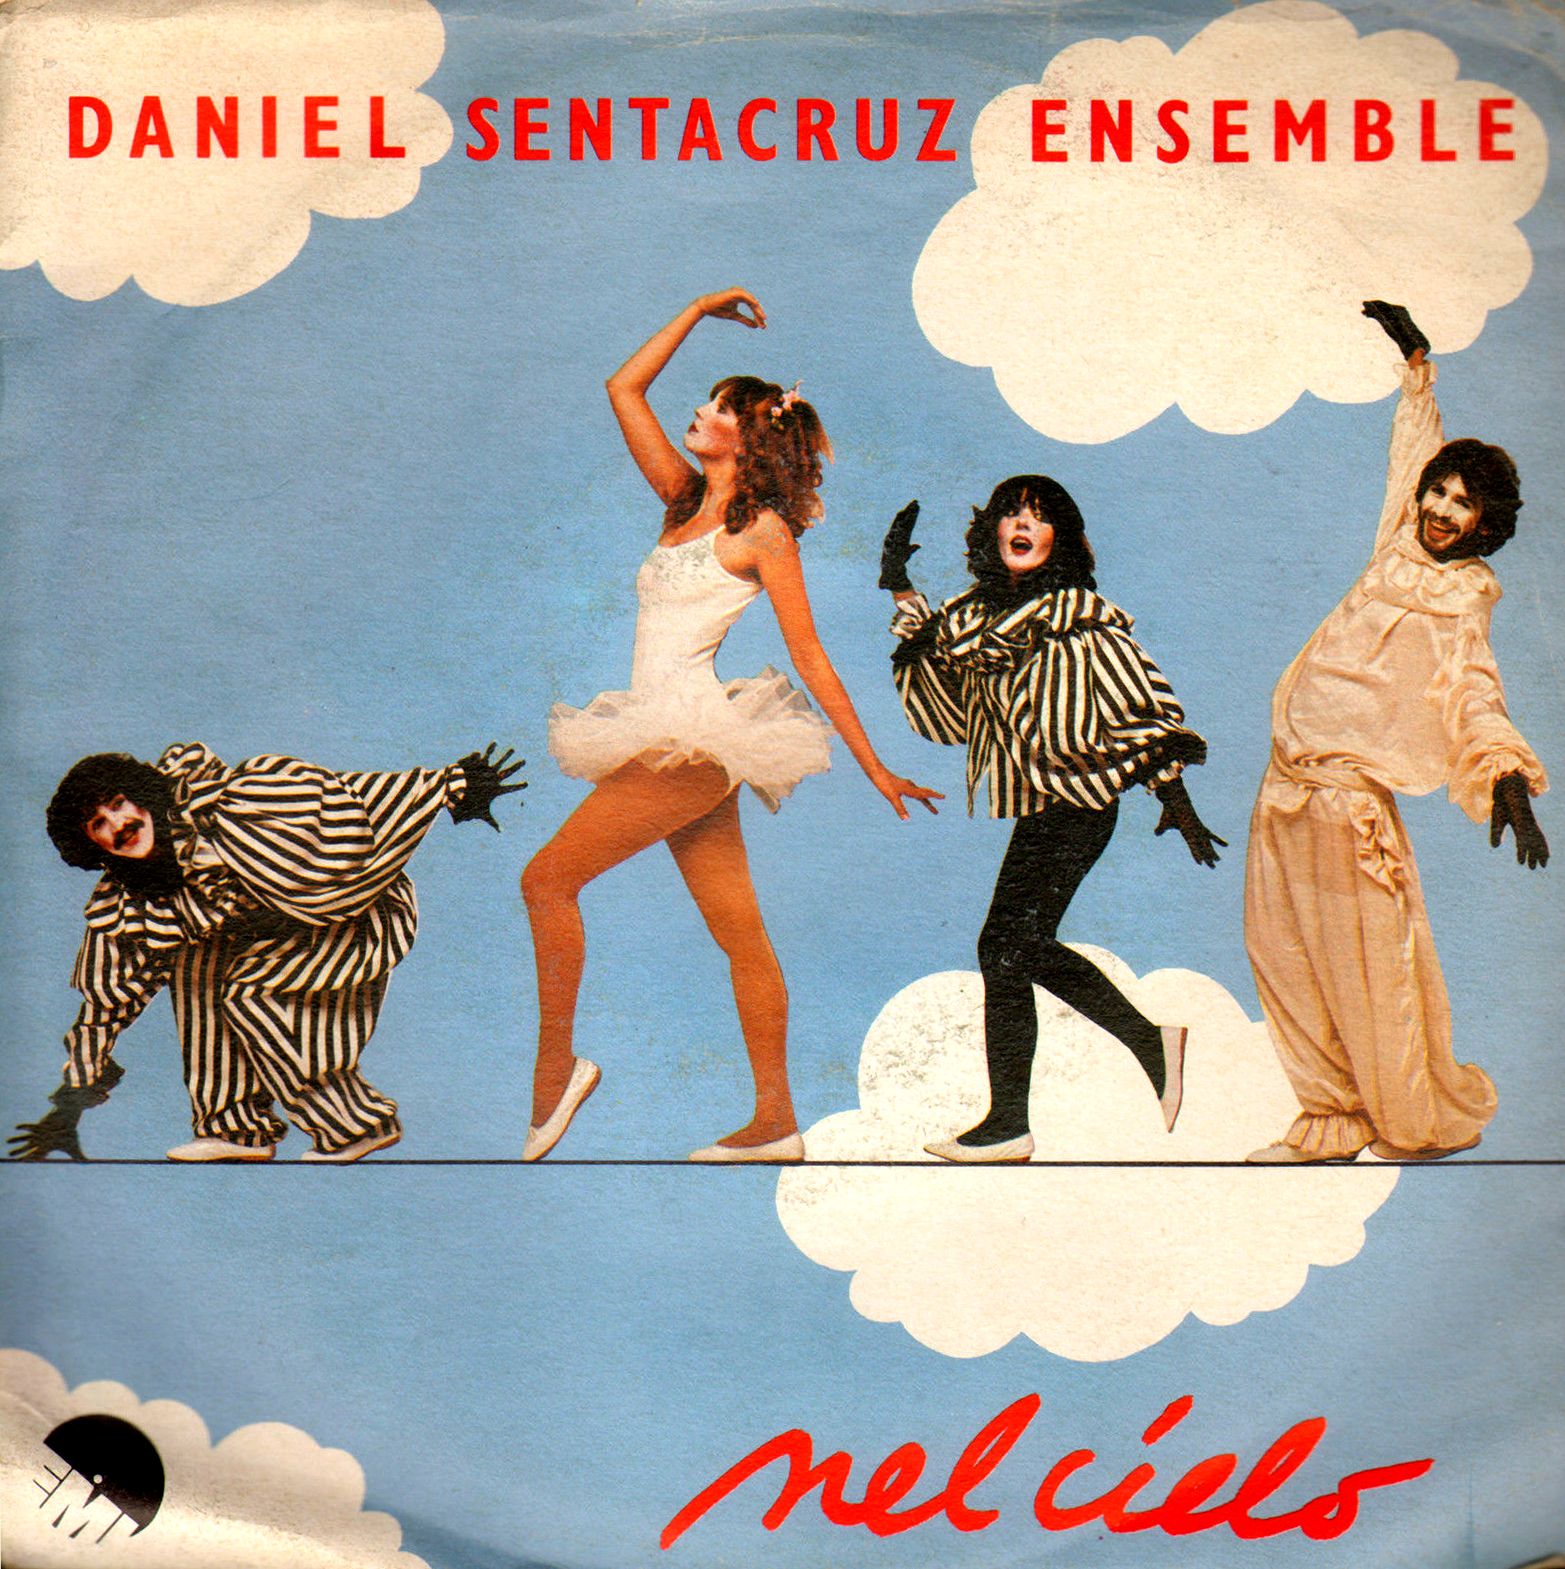 Daniel Sentacruz Ensemble - Nel cielo